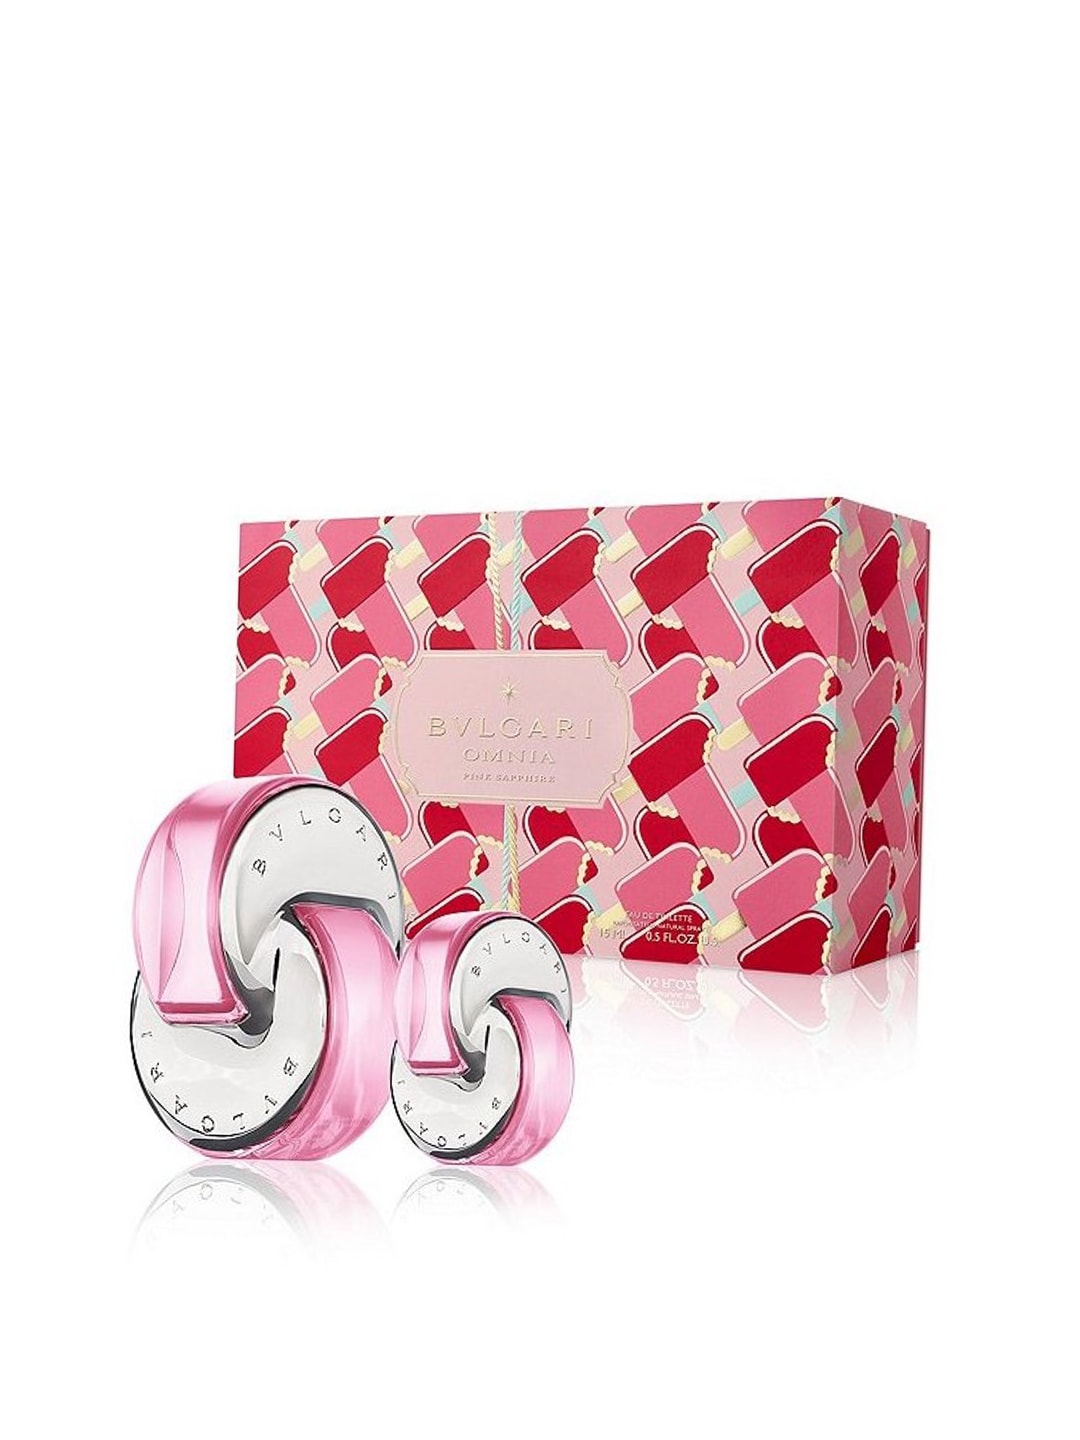 Bvlgari Women Pink Sapphire EDT Fragrance Gift Set Price in India